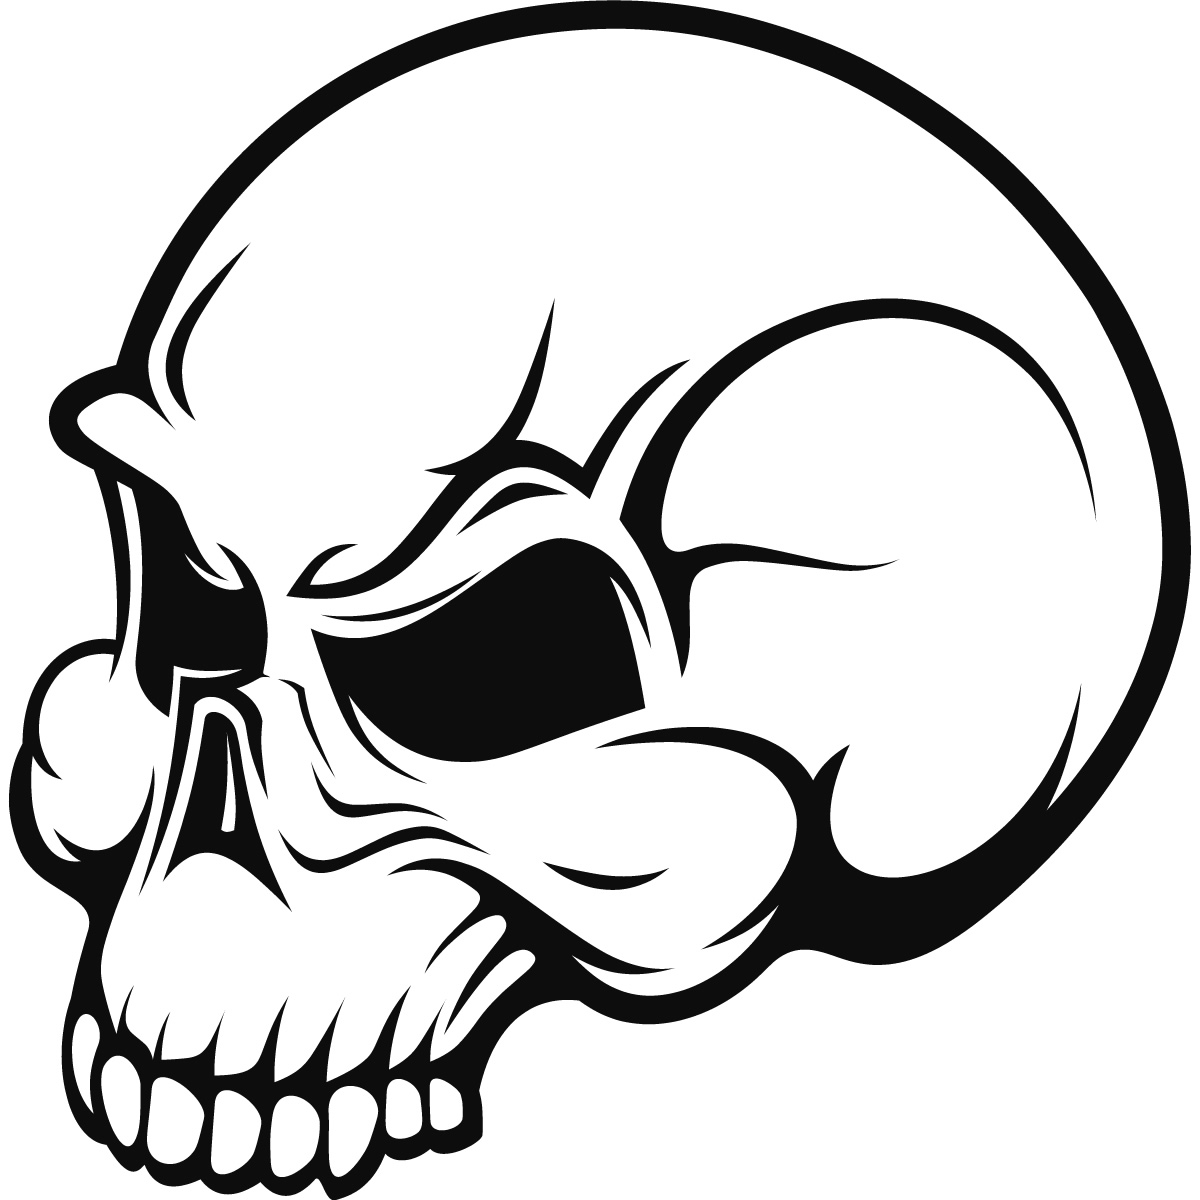 Skull sketch - dreamsnipod